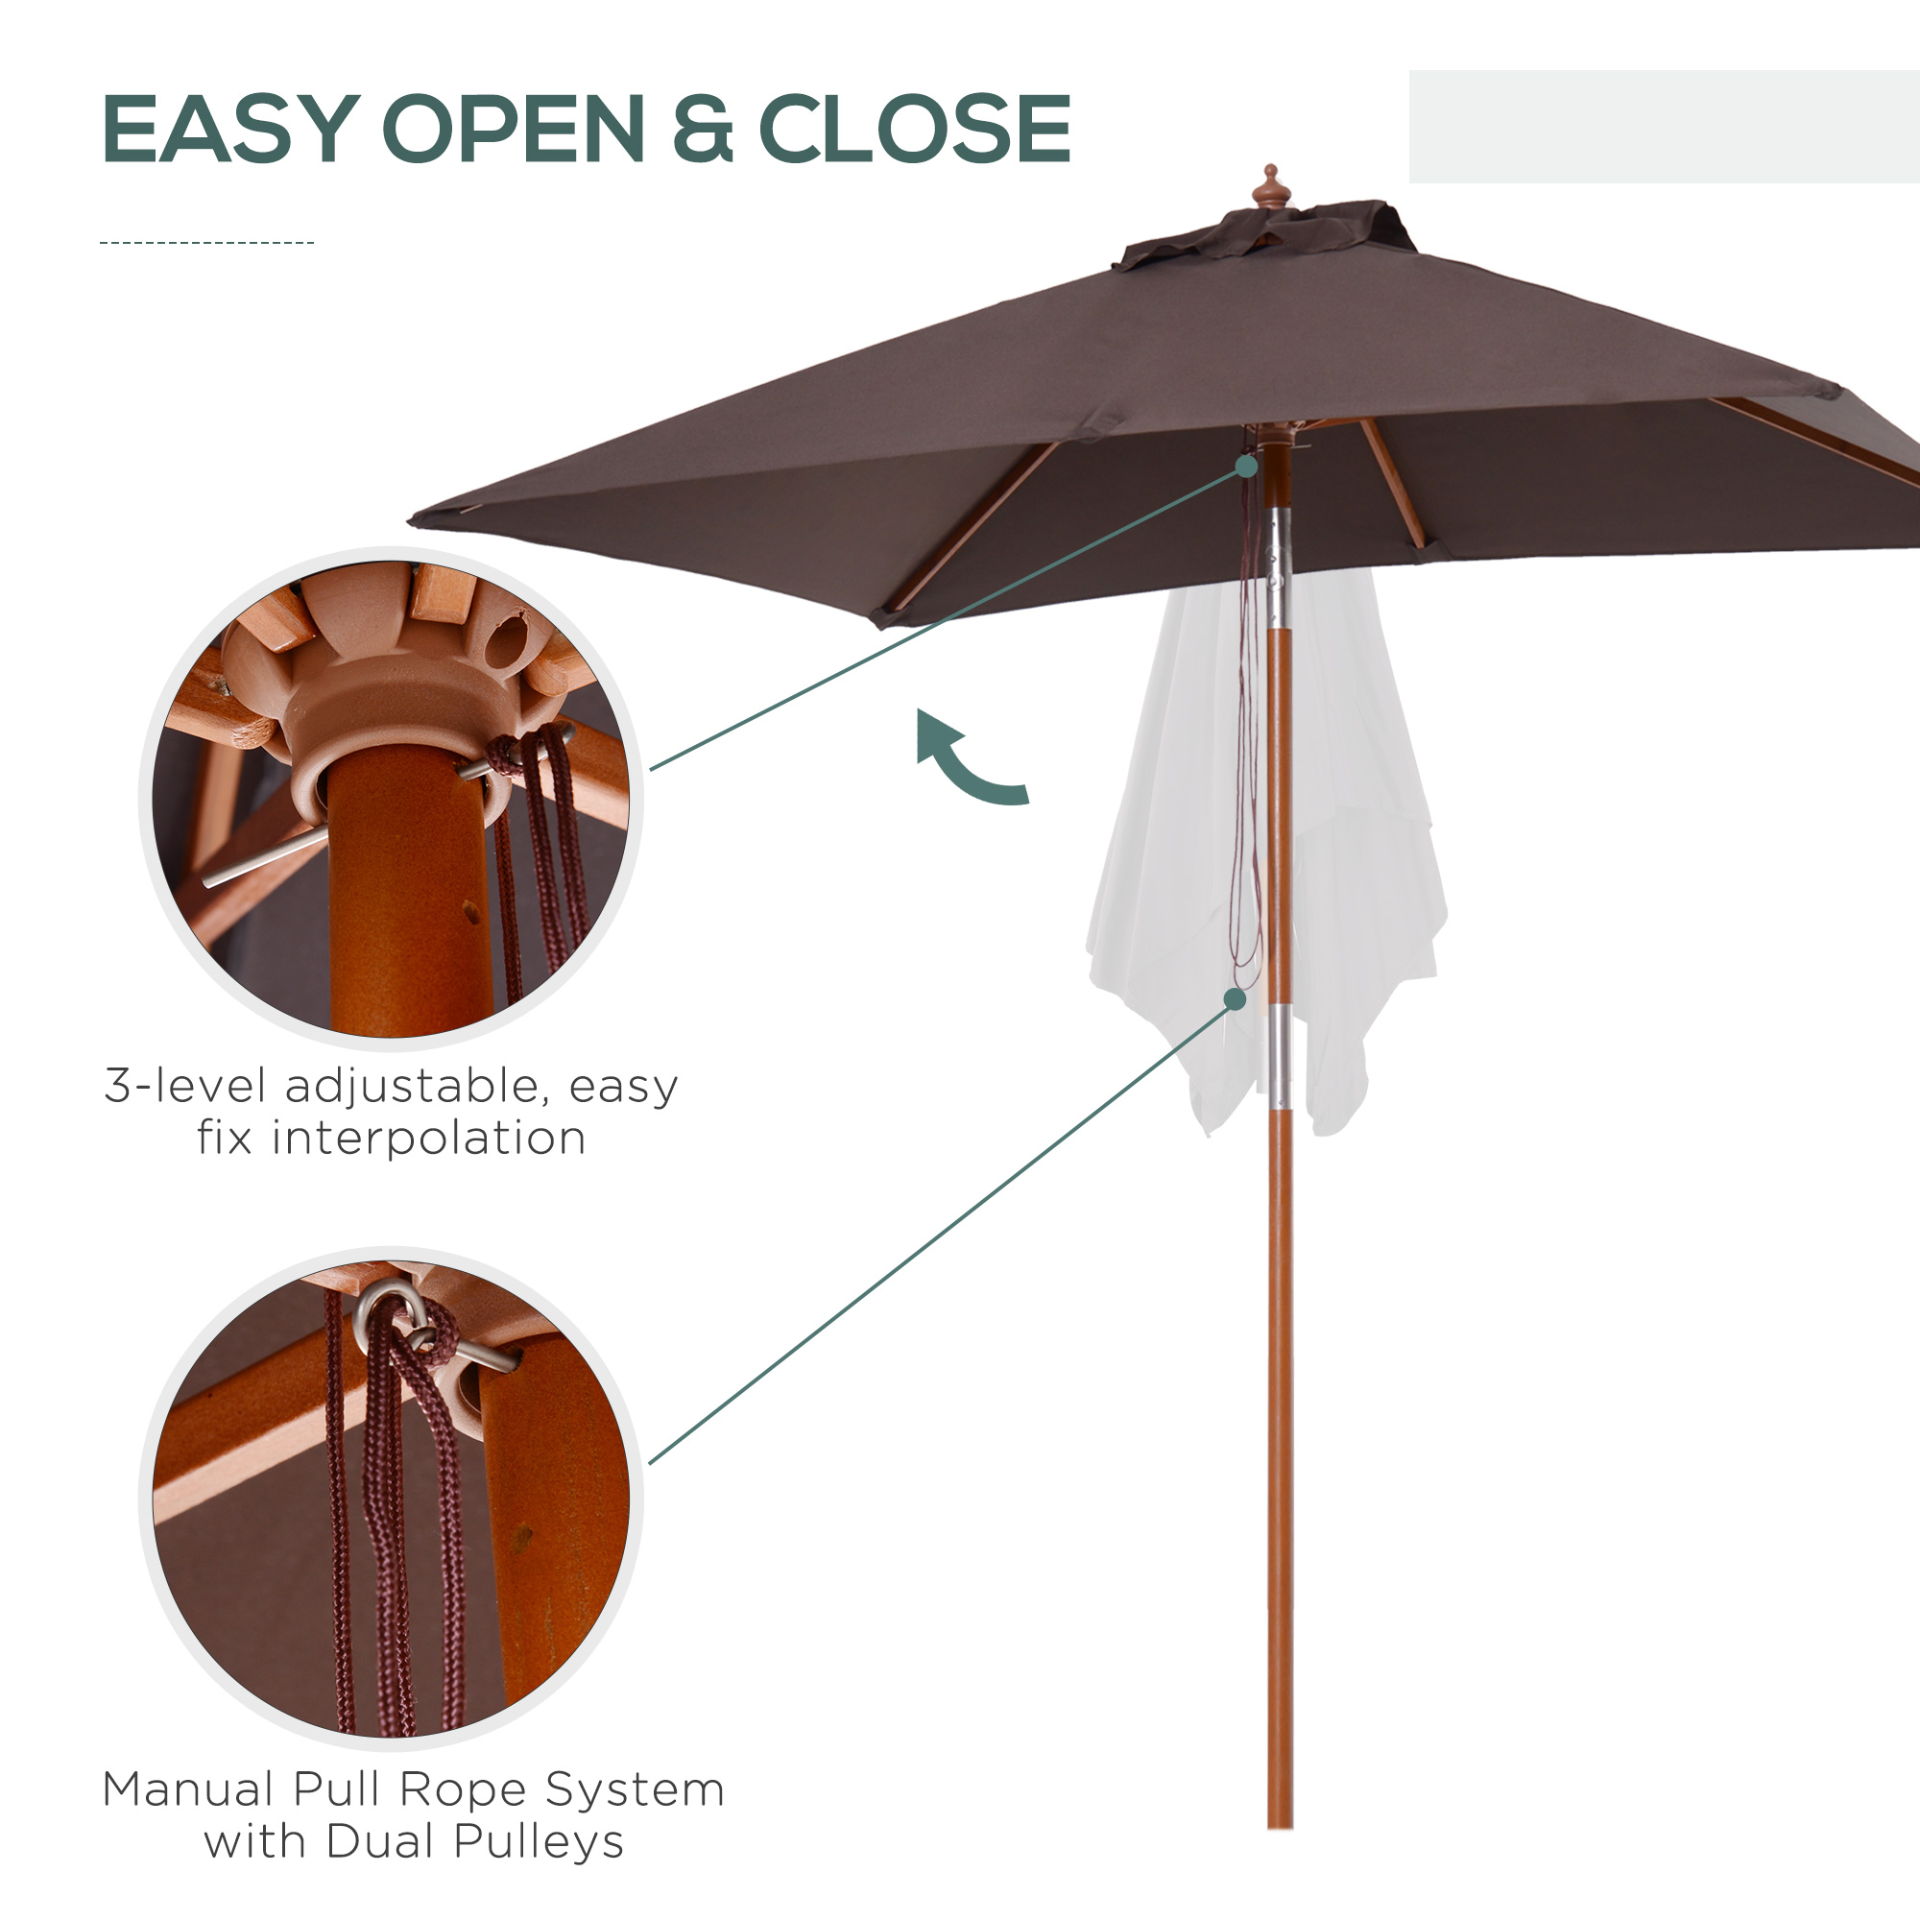 Outsunny 2m x 1.5m Patio Parasol Garden Umbrellas Sun Umbrella Bamboo Sunshade Canopy Outdoor Backyard Furniture Fir Wooden Pole 6 Ribs Tilt Mechanism - Coffee